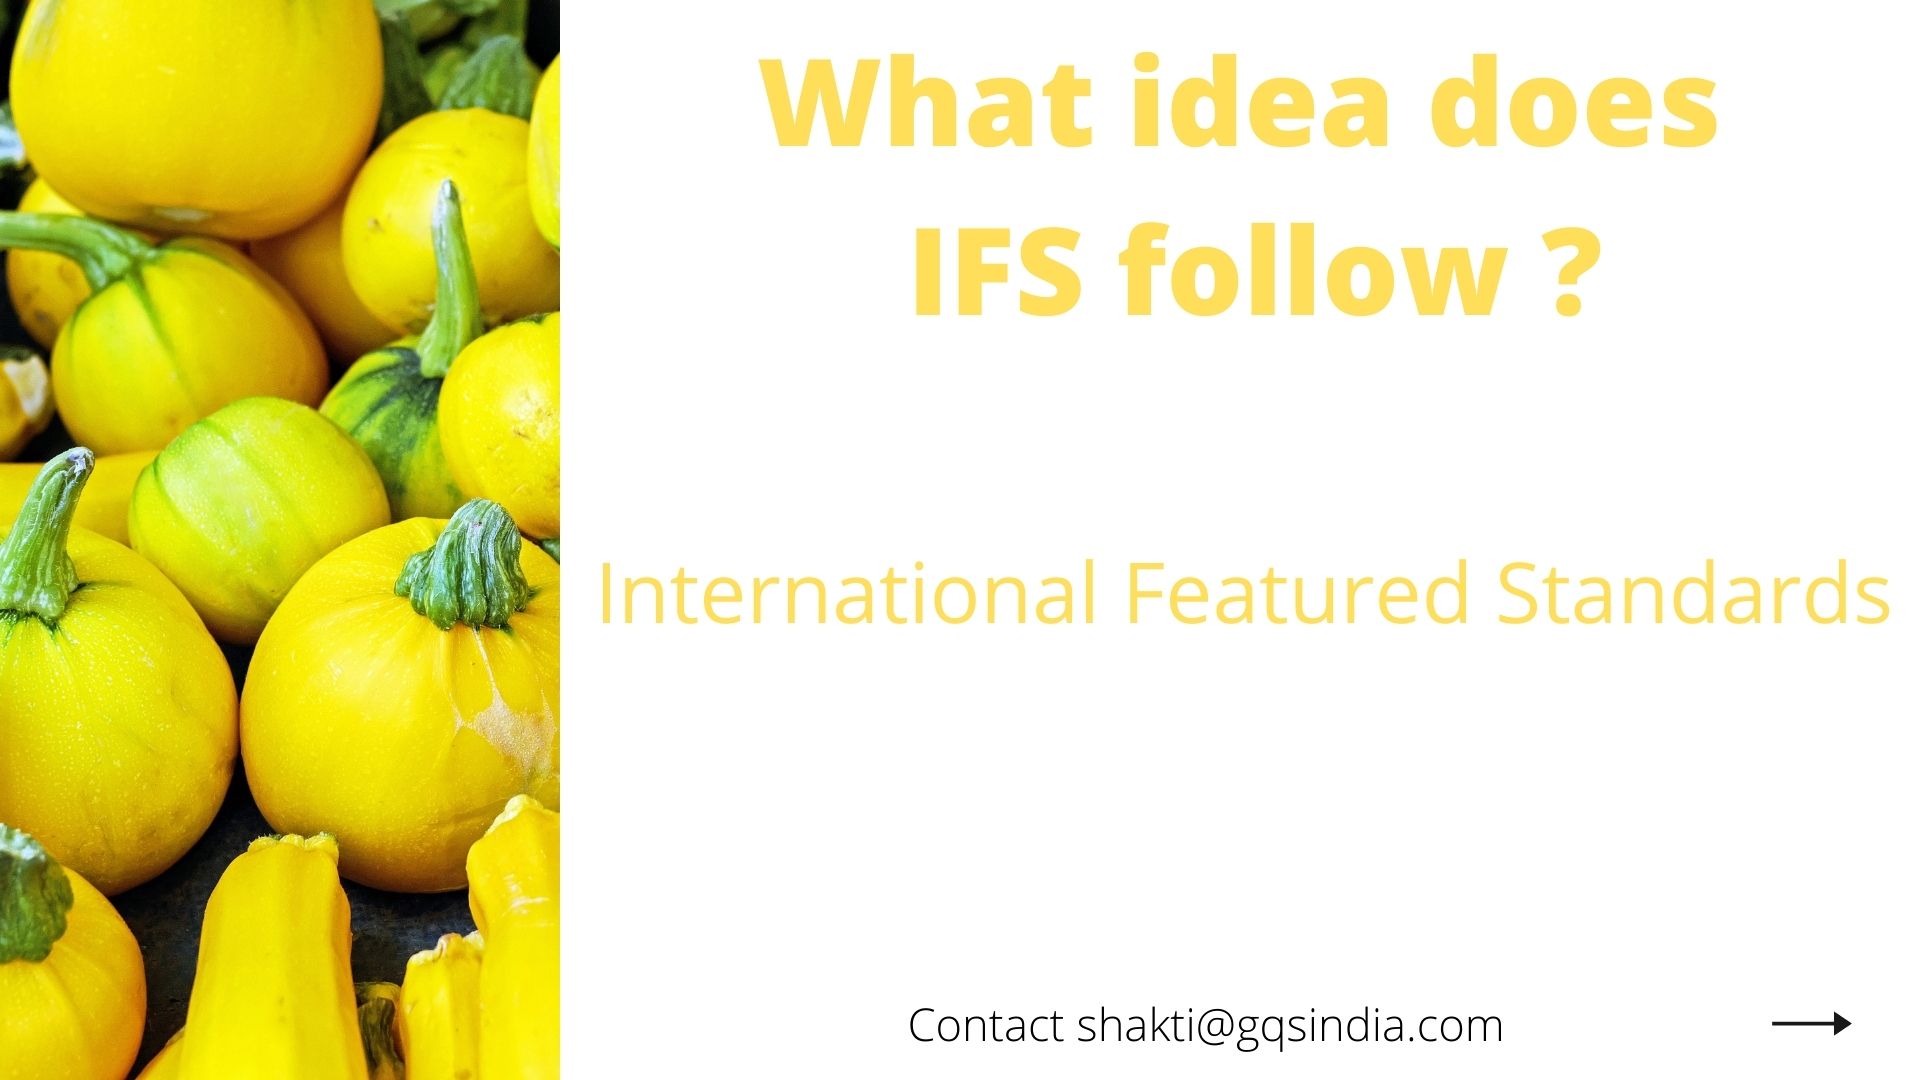 What idea does IFS follow?